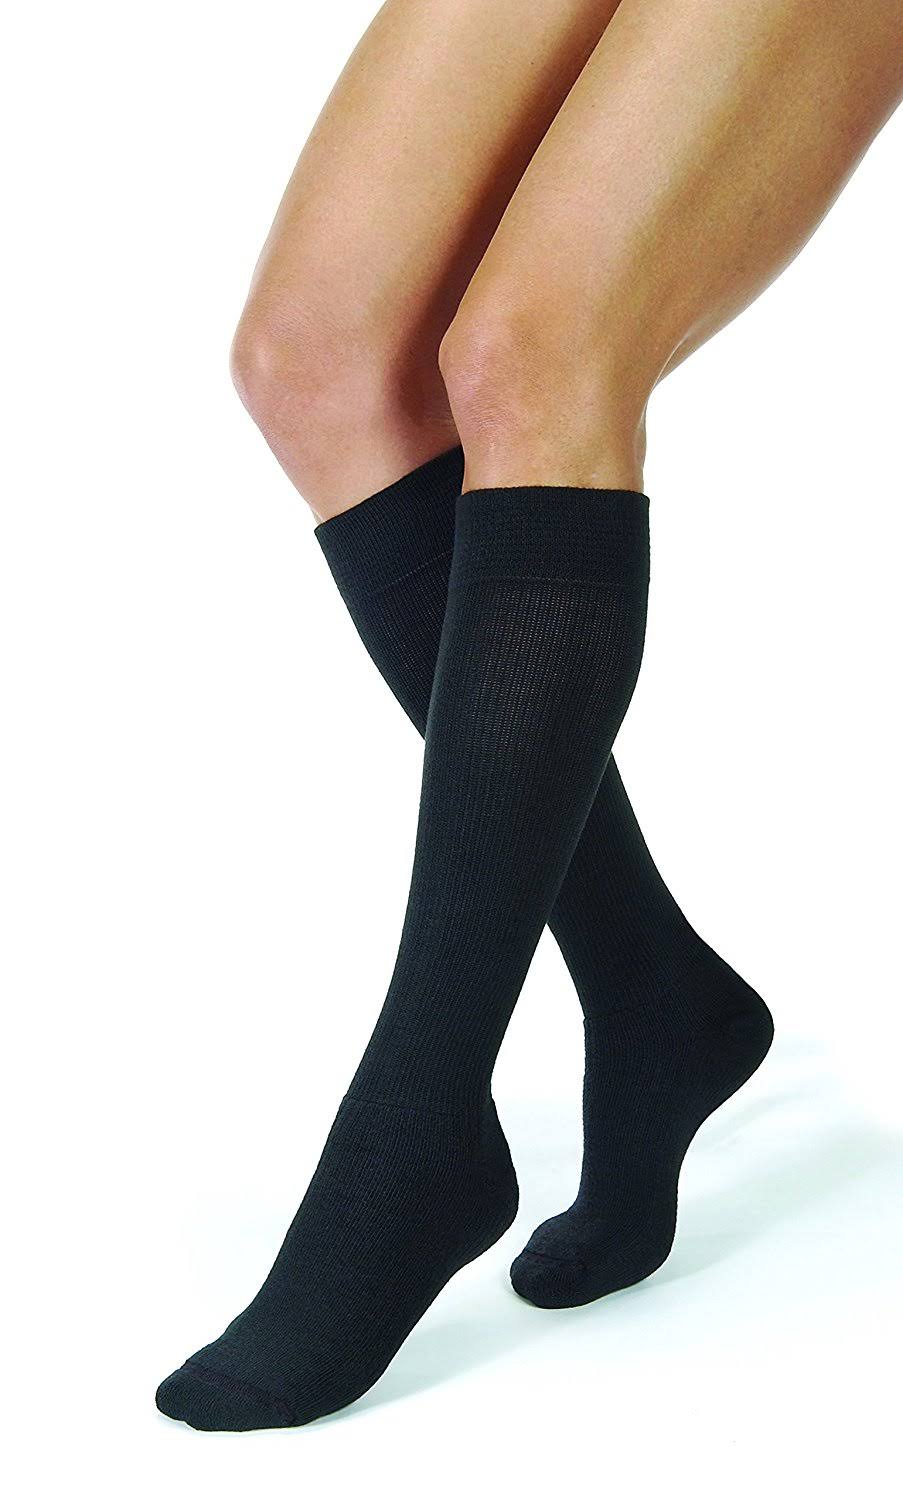 Jobst Unisex Active Wear Knee High Socks - 15-20mmHg, Large, Black